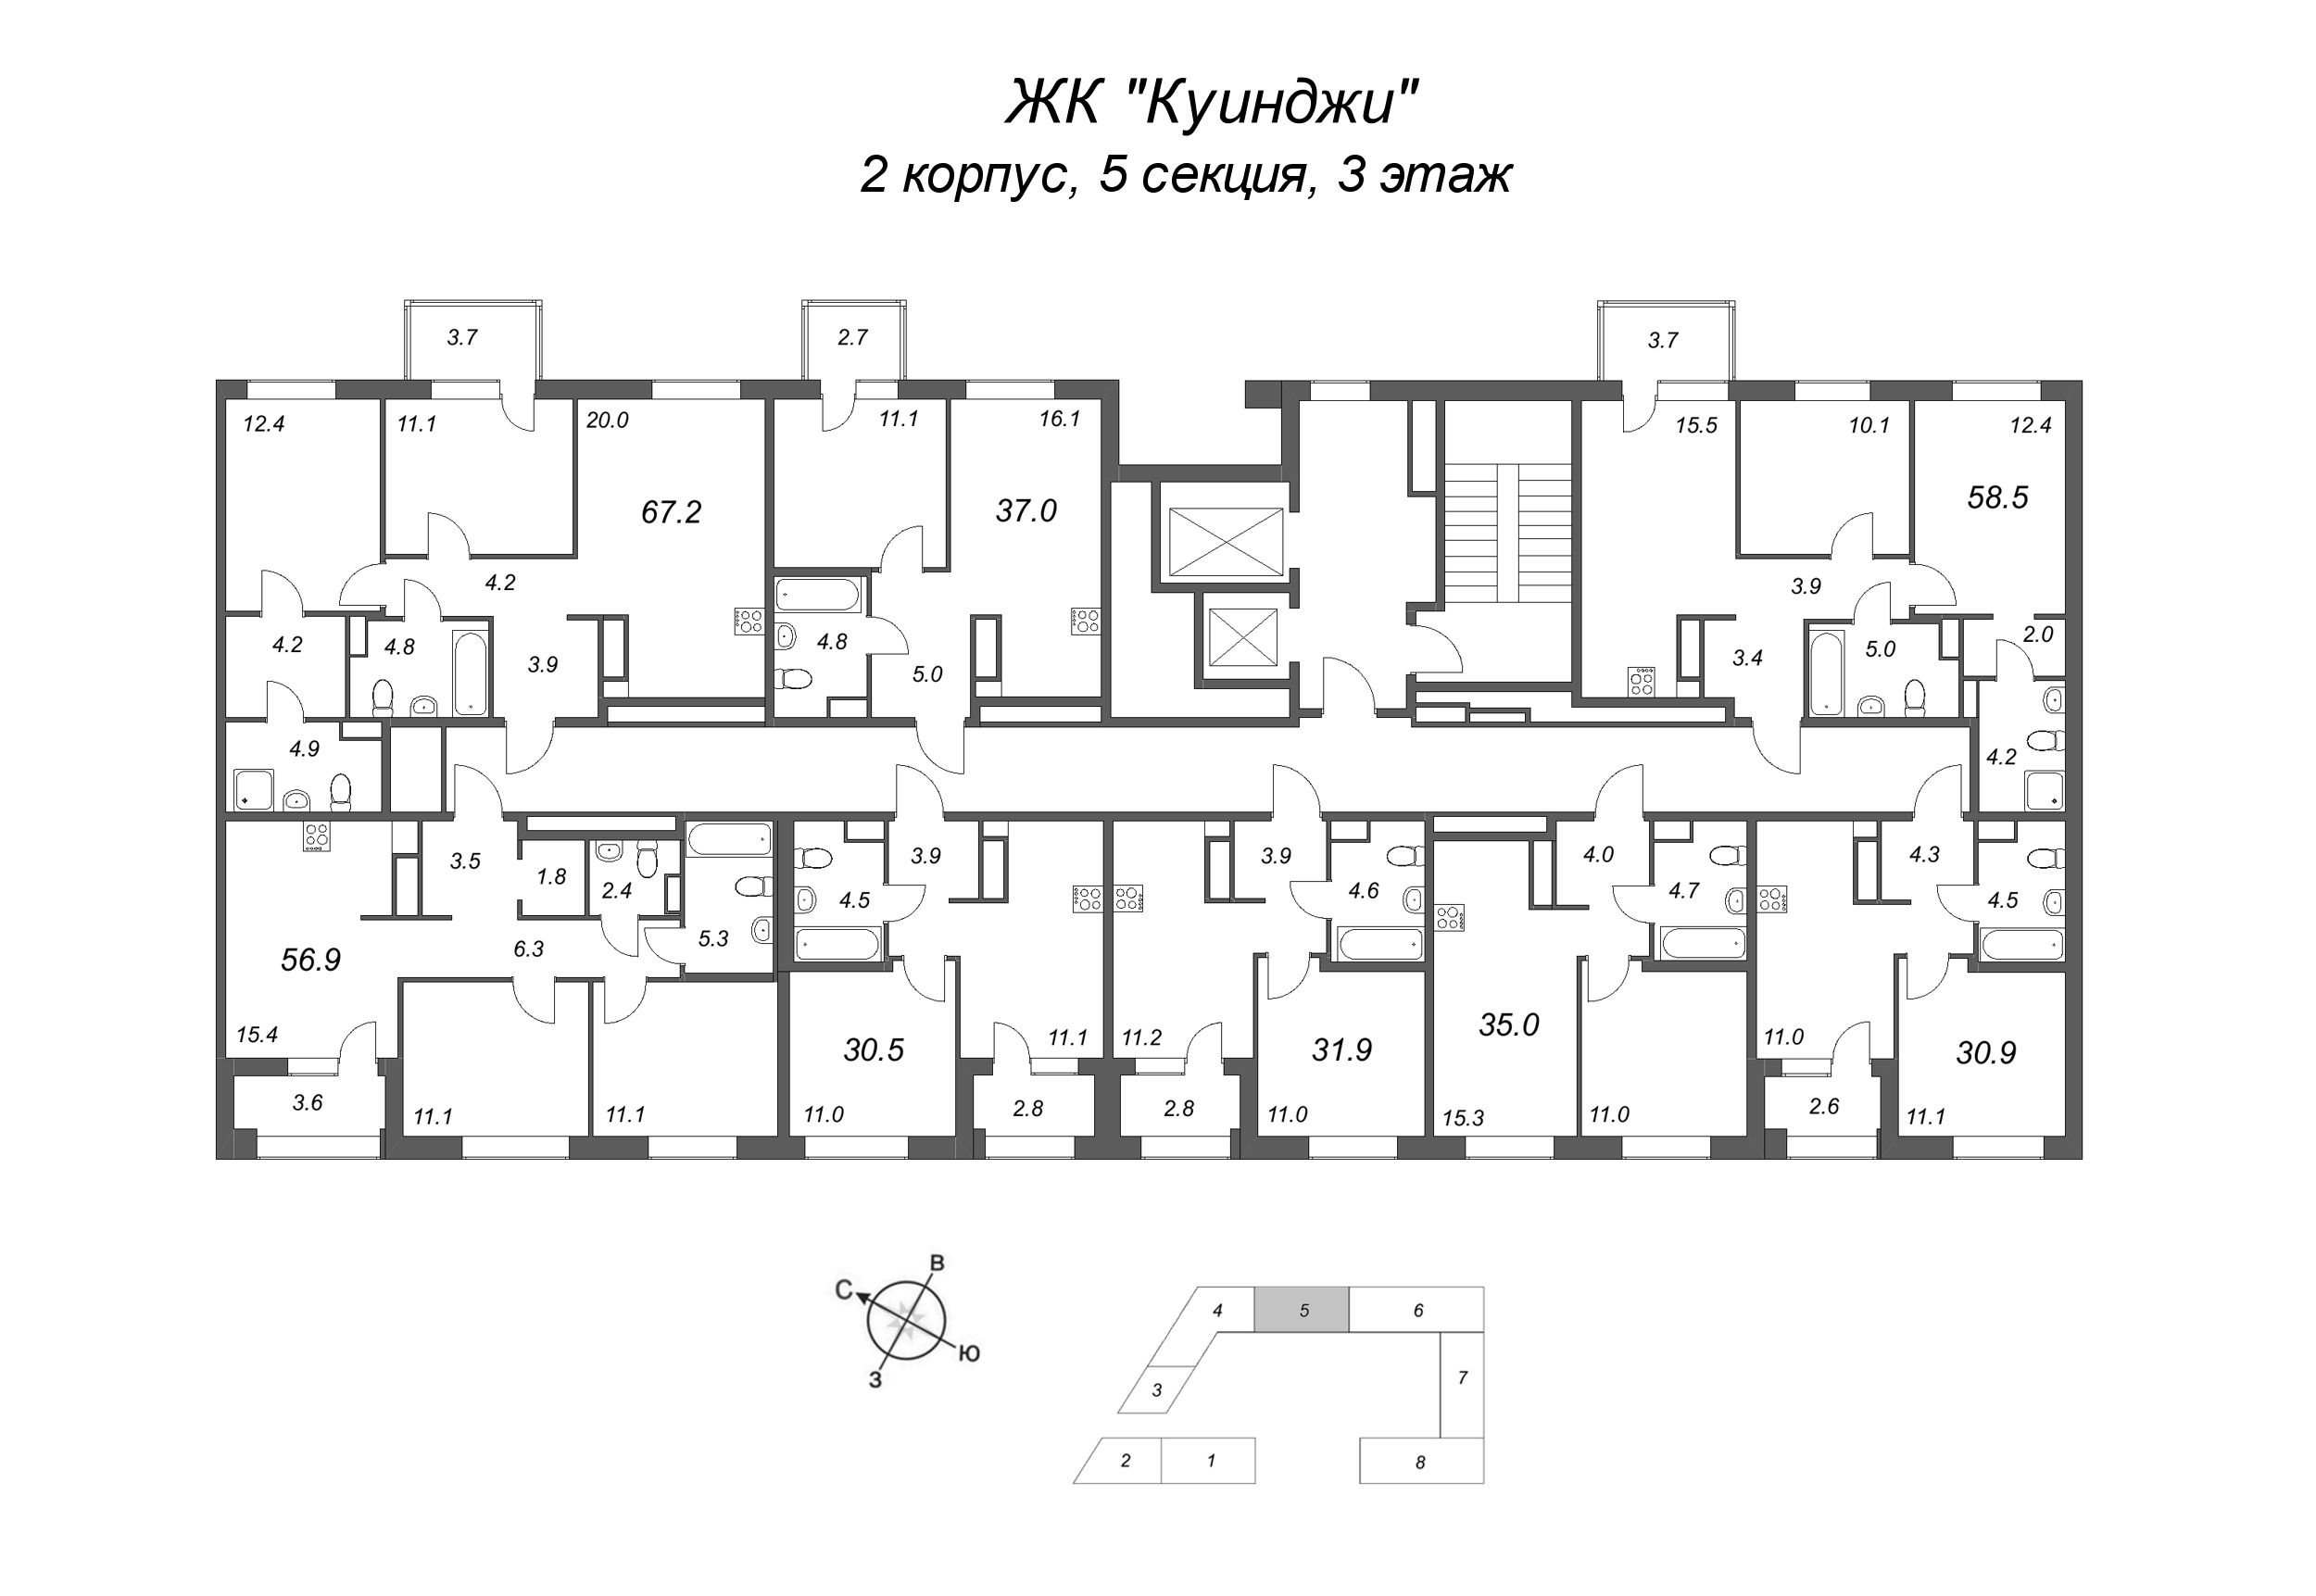 3-комнатная (Евро) квартира, 67.2 м² - планировка этажа